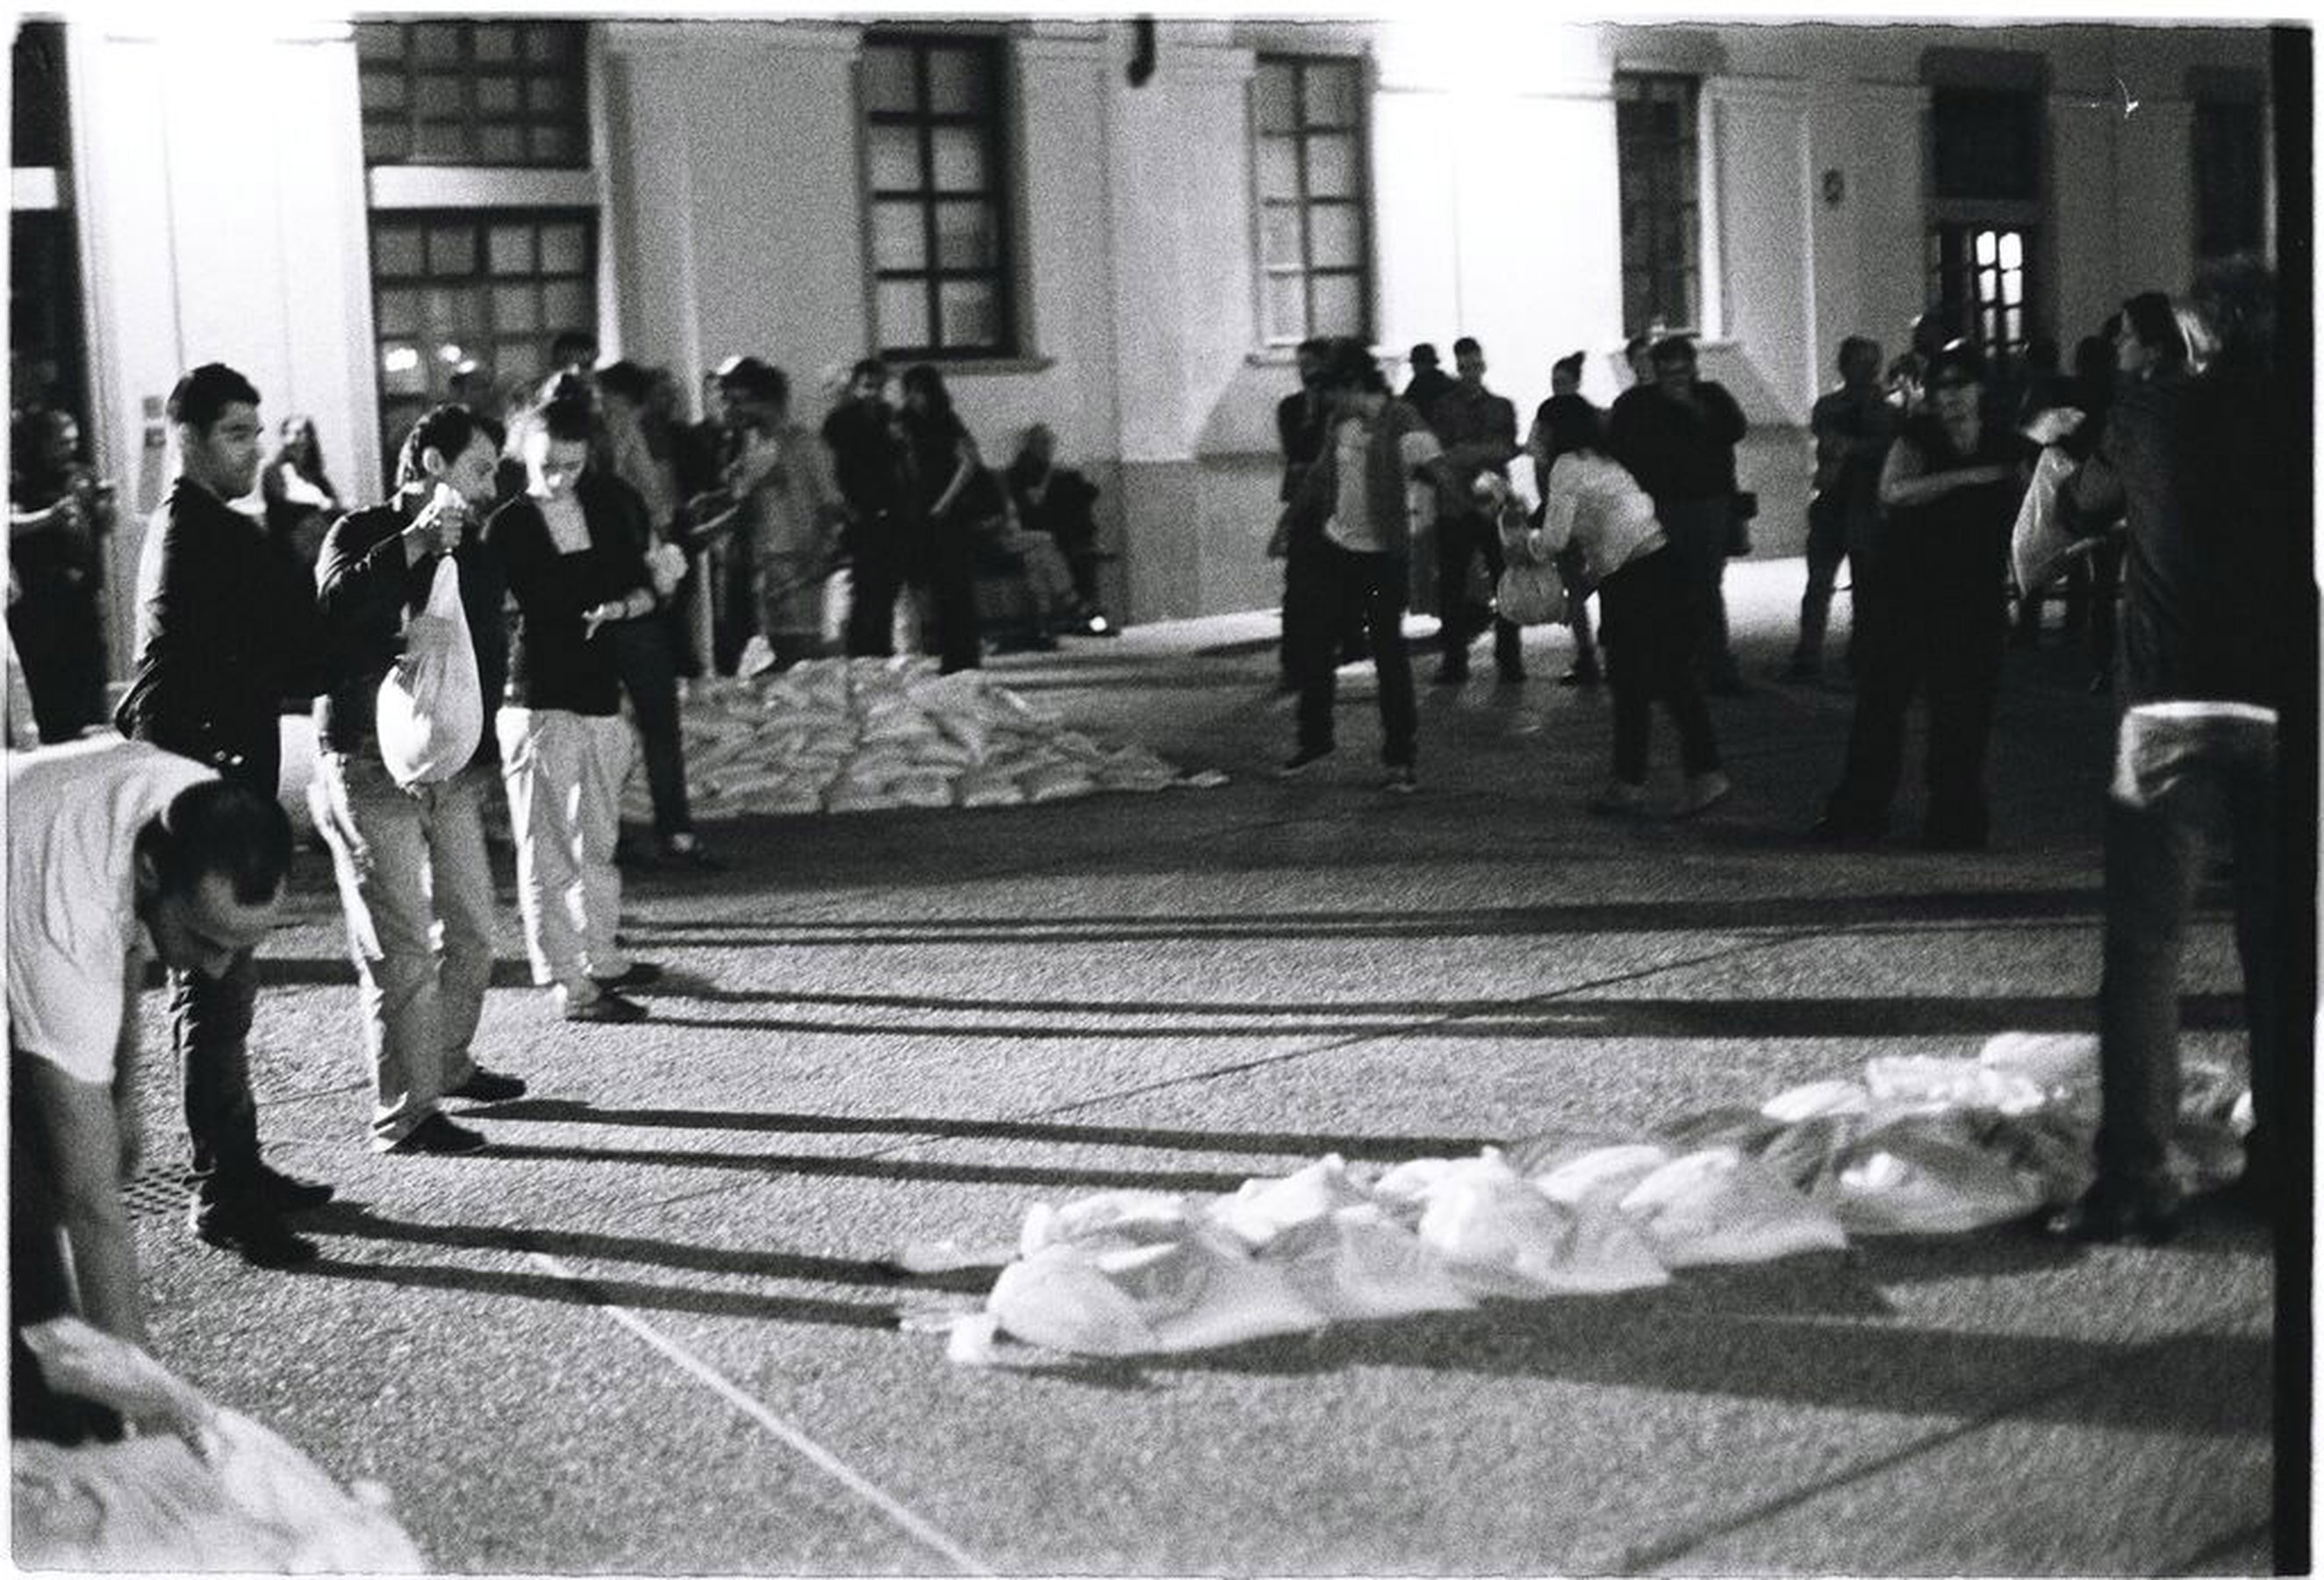 Action for a sandbag brigade - writing the borders of crisis, 2011 performance